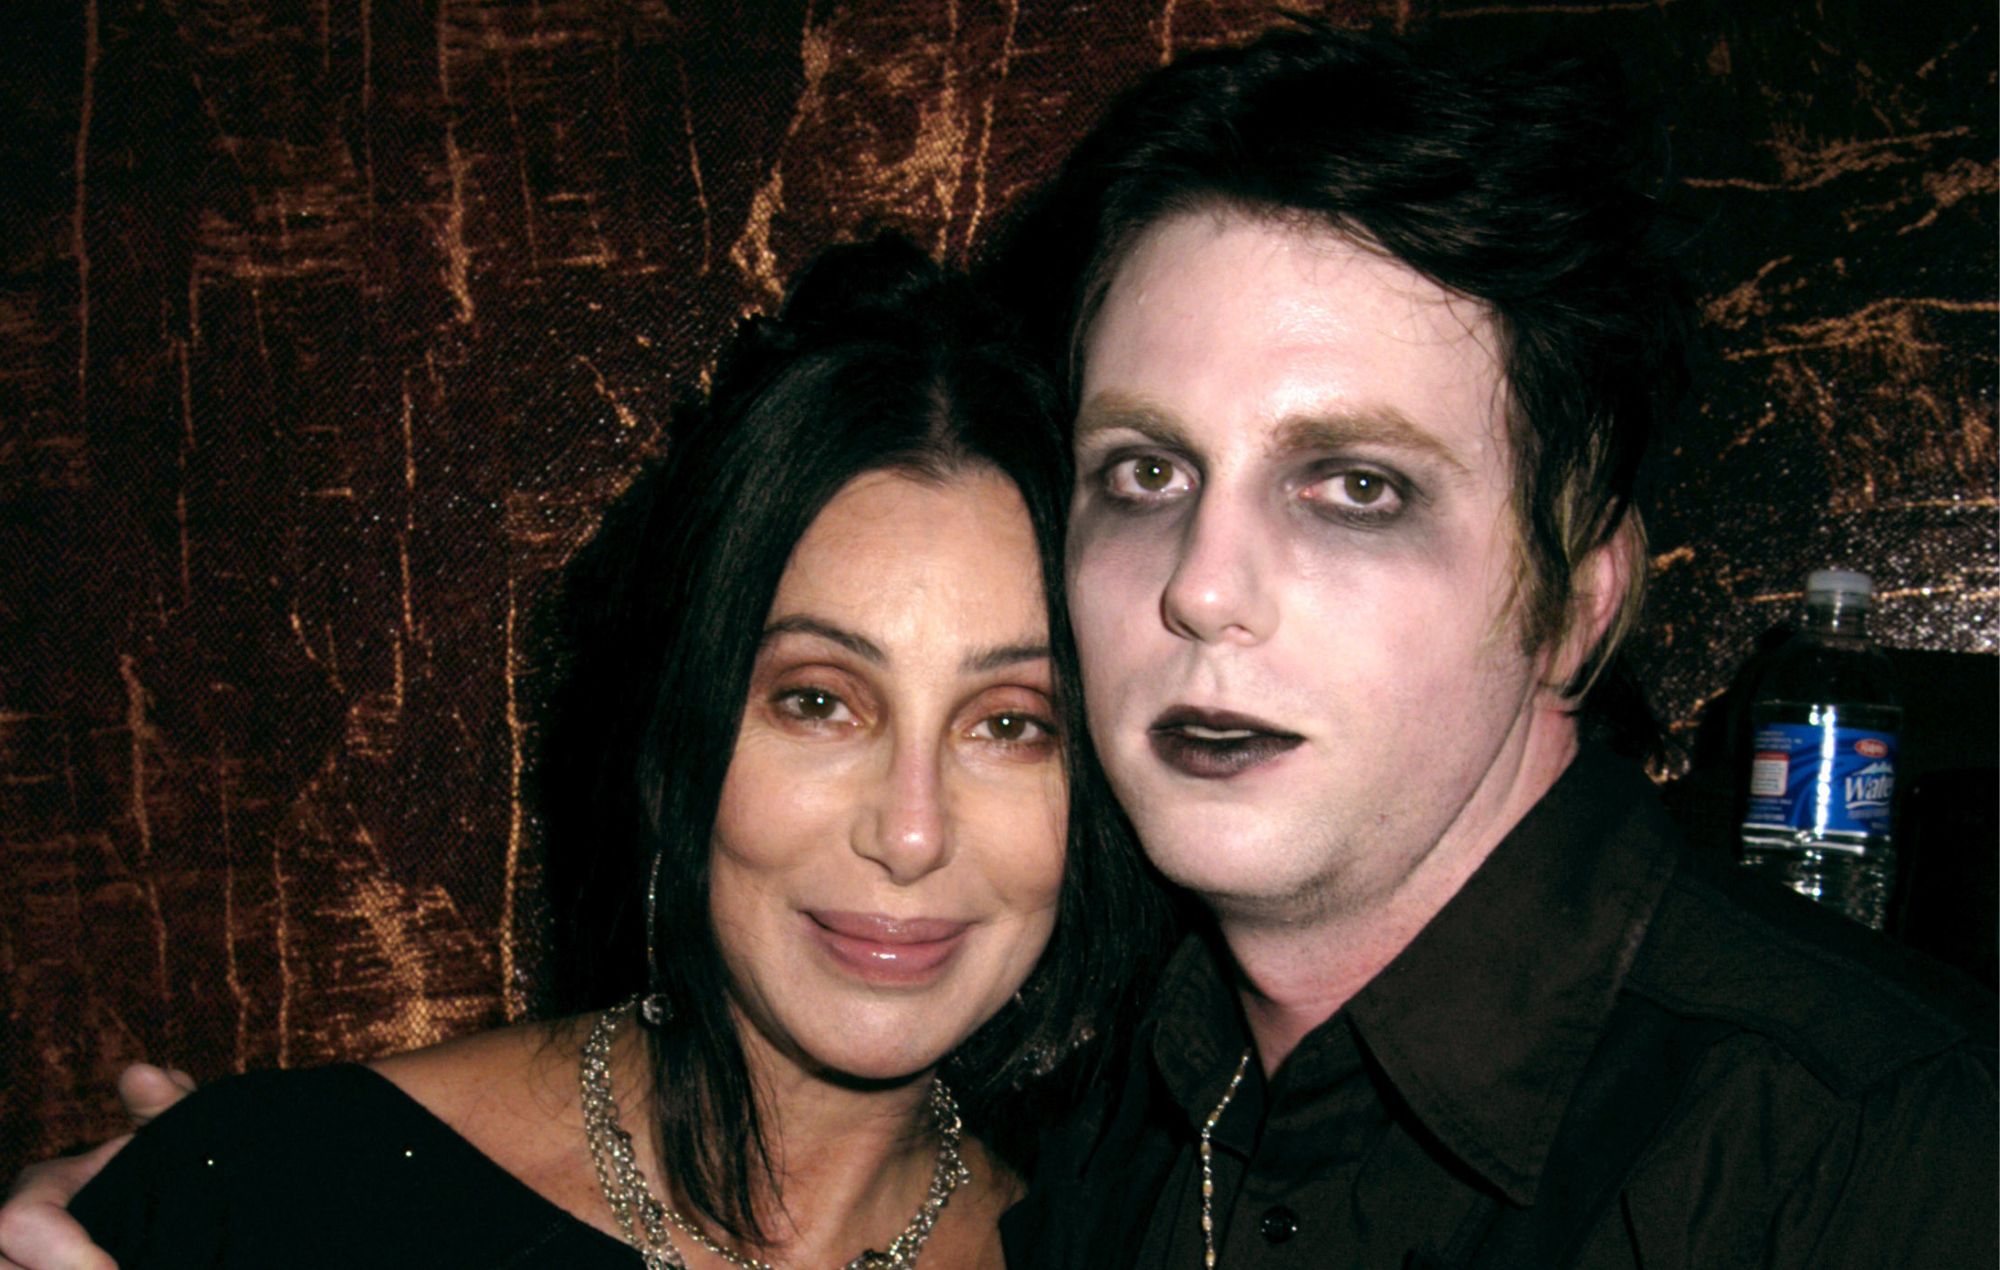 Cher and her son, Elijah Blue Allman